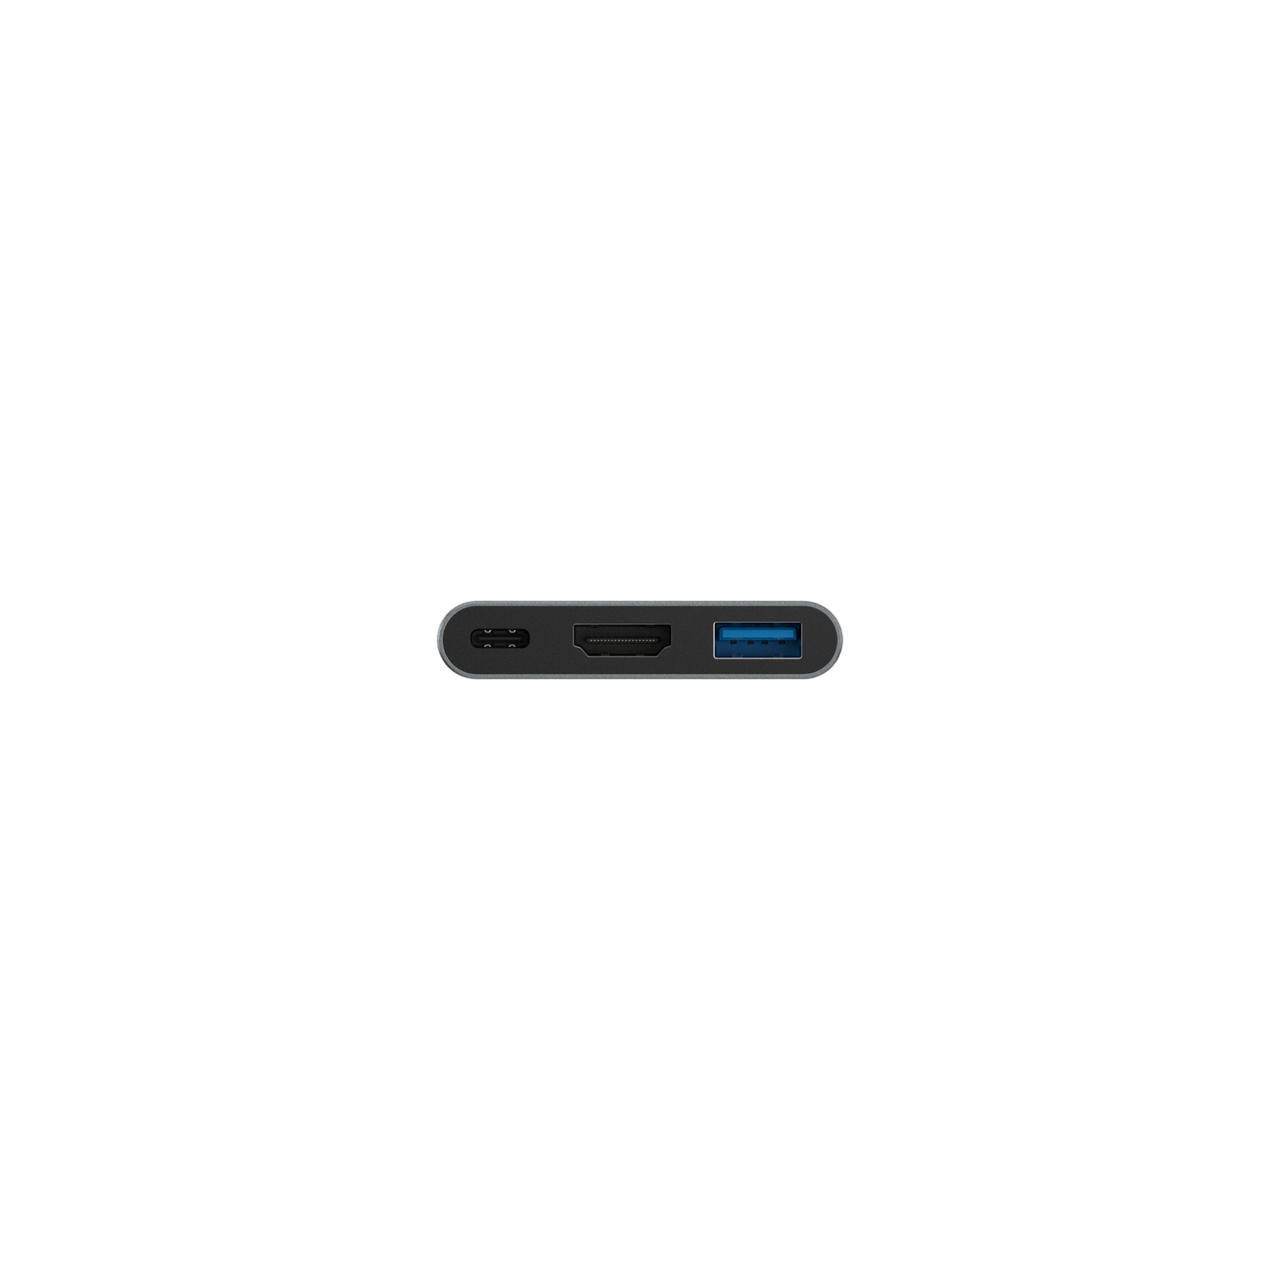 USB-C 3 IN 1 Multimedia Hub